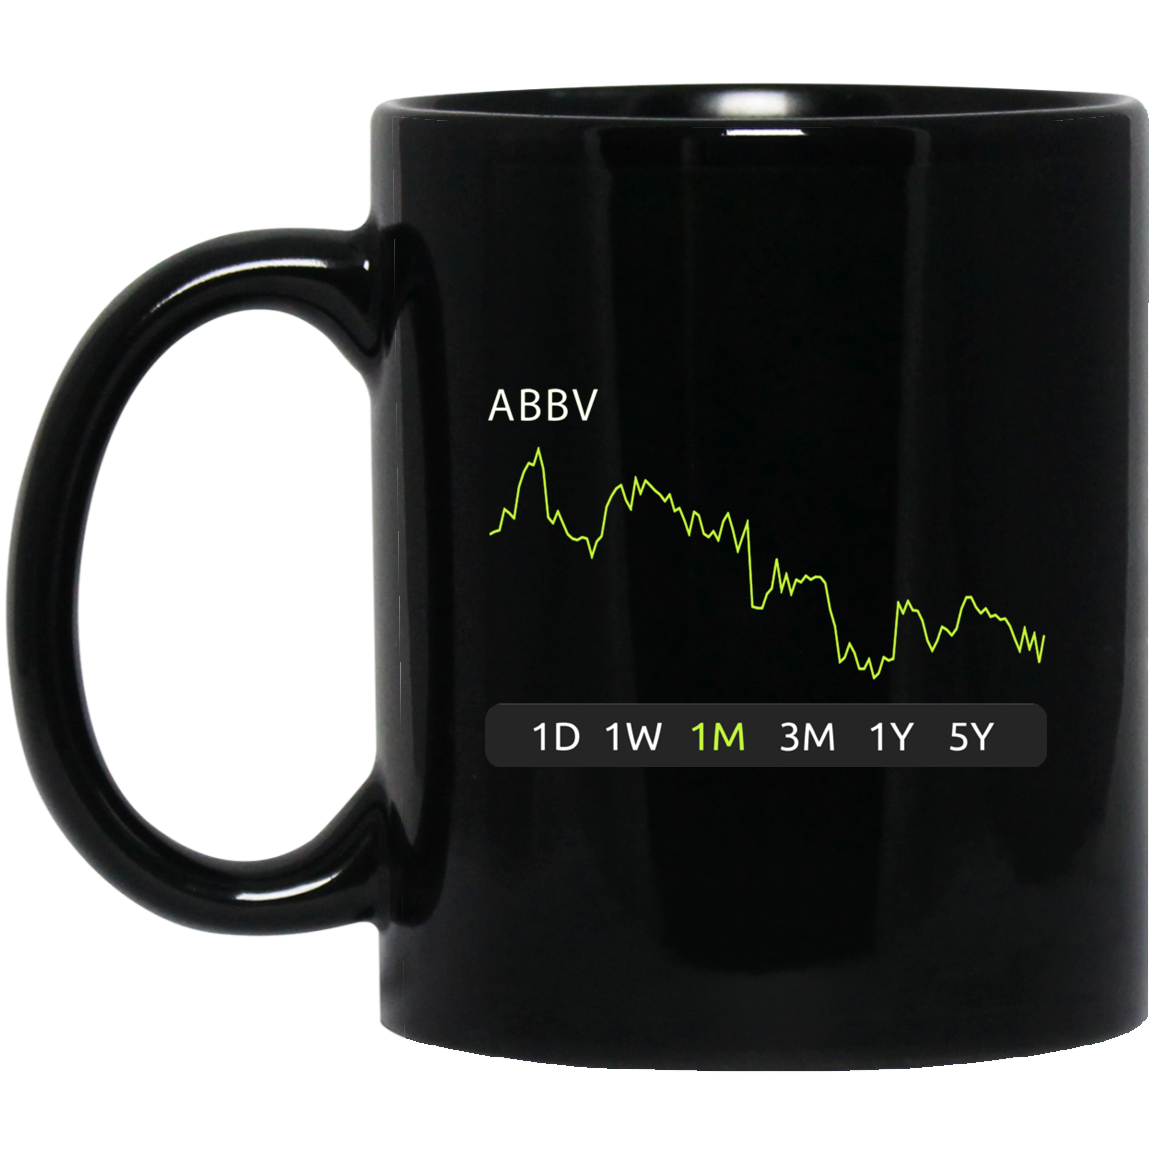 ABBV Stock 1m Mug